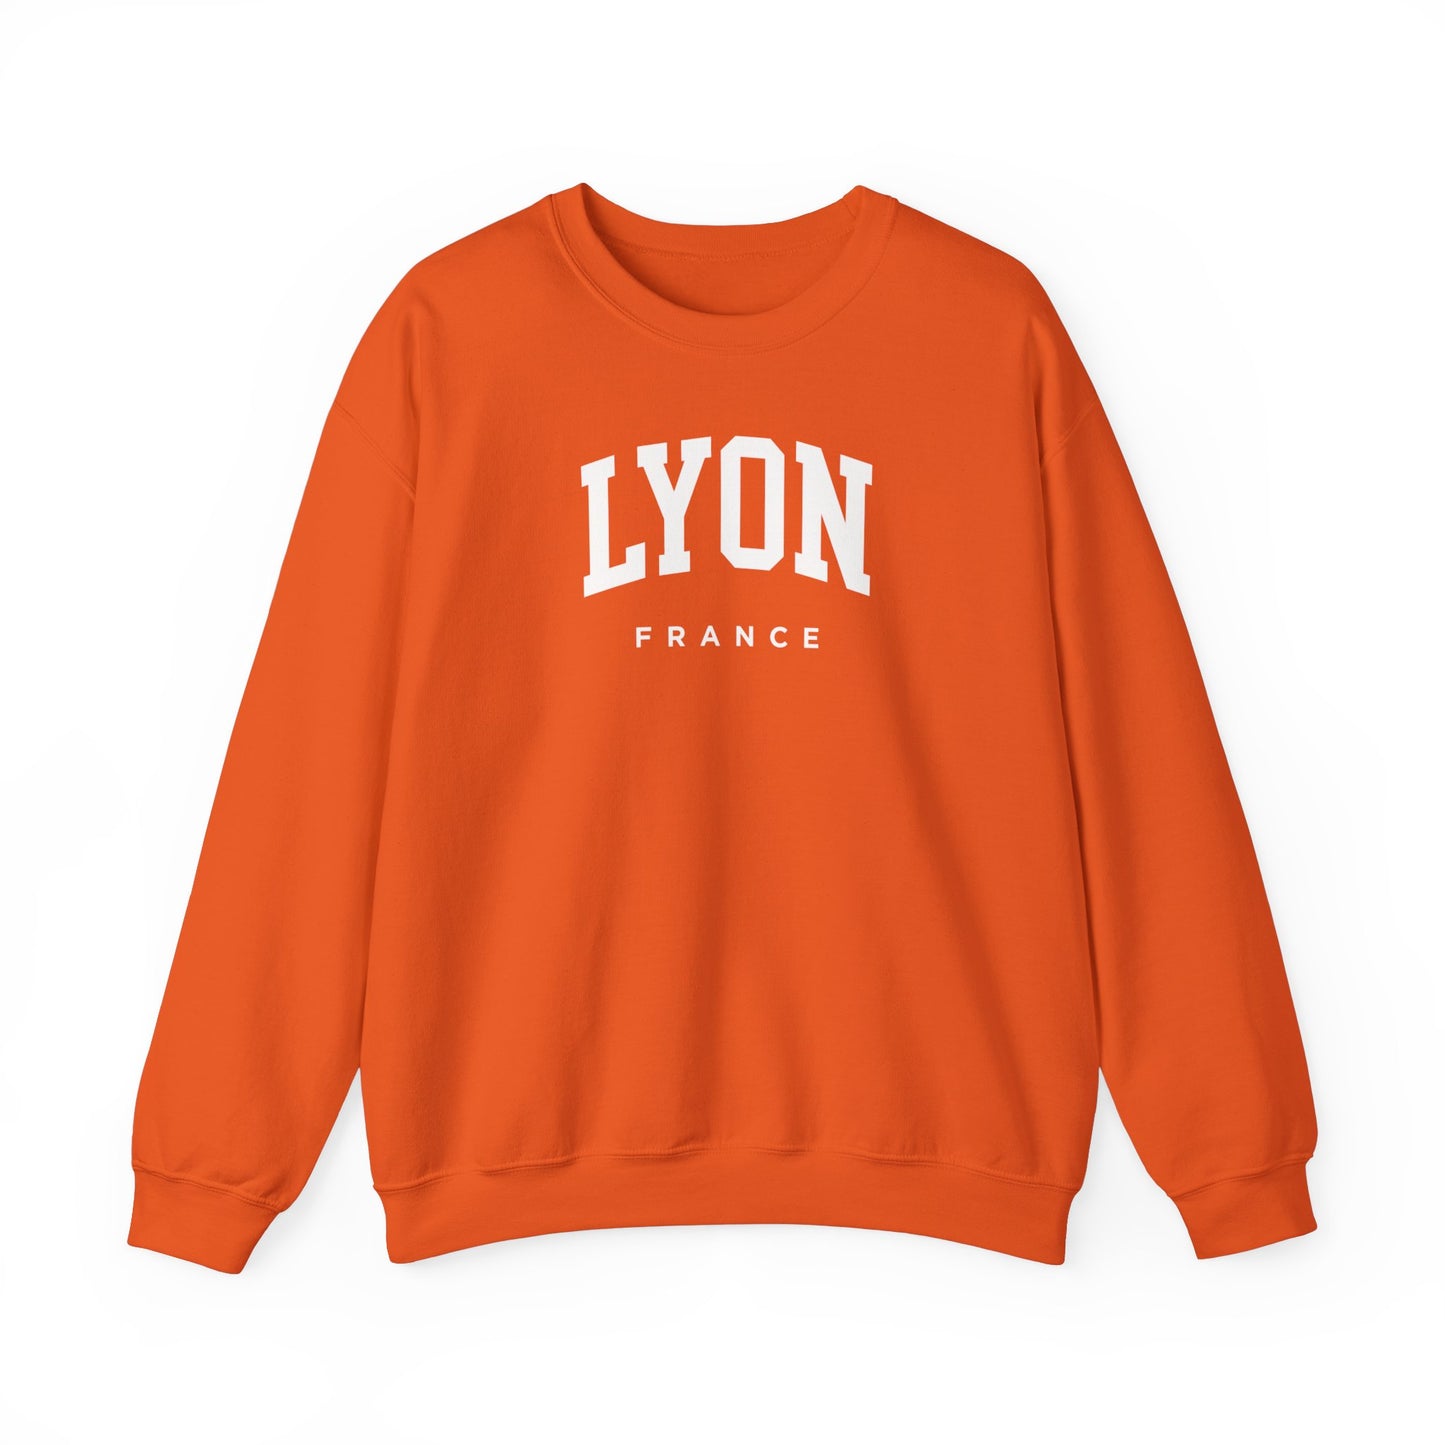 Lyon France Sweatshirt